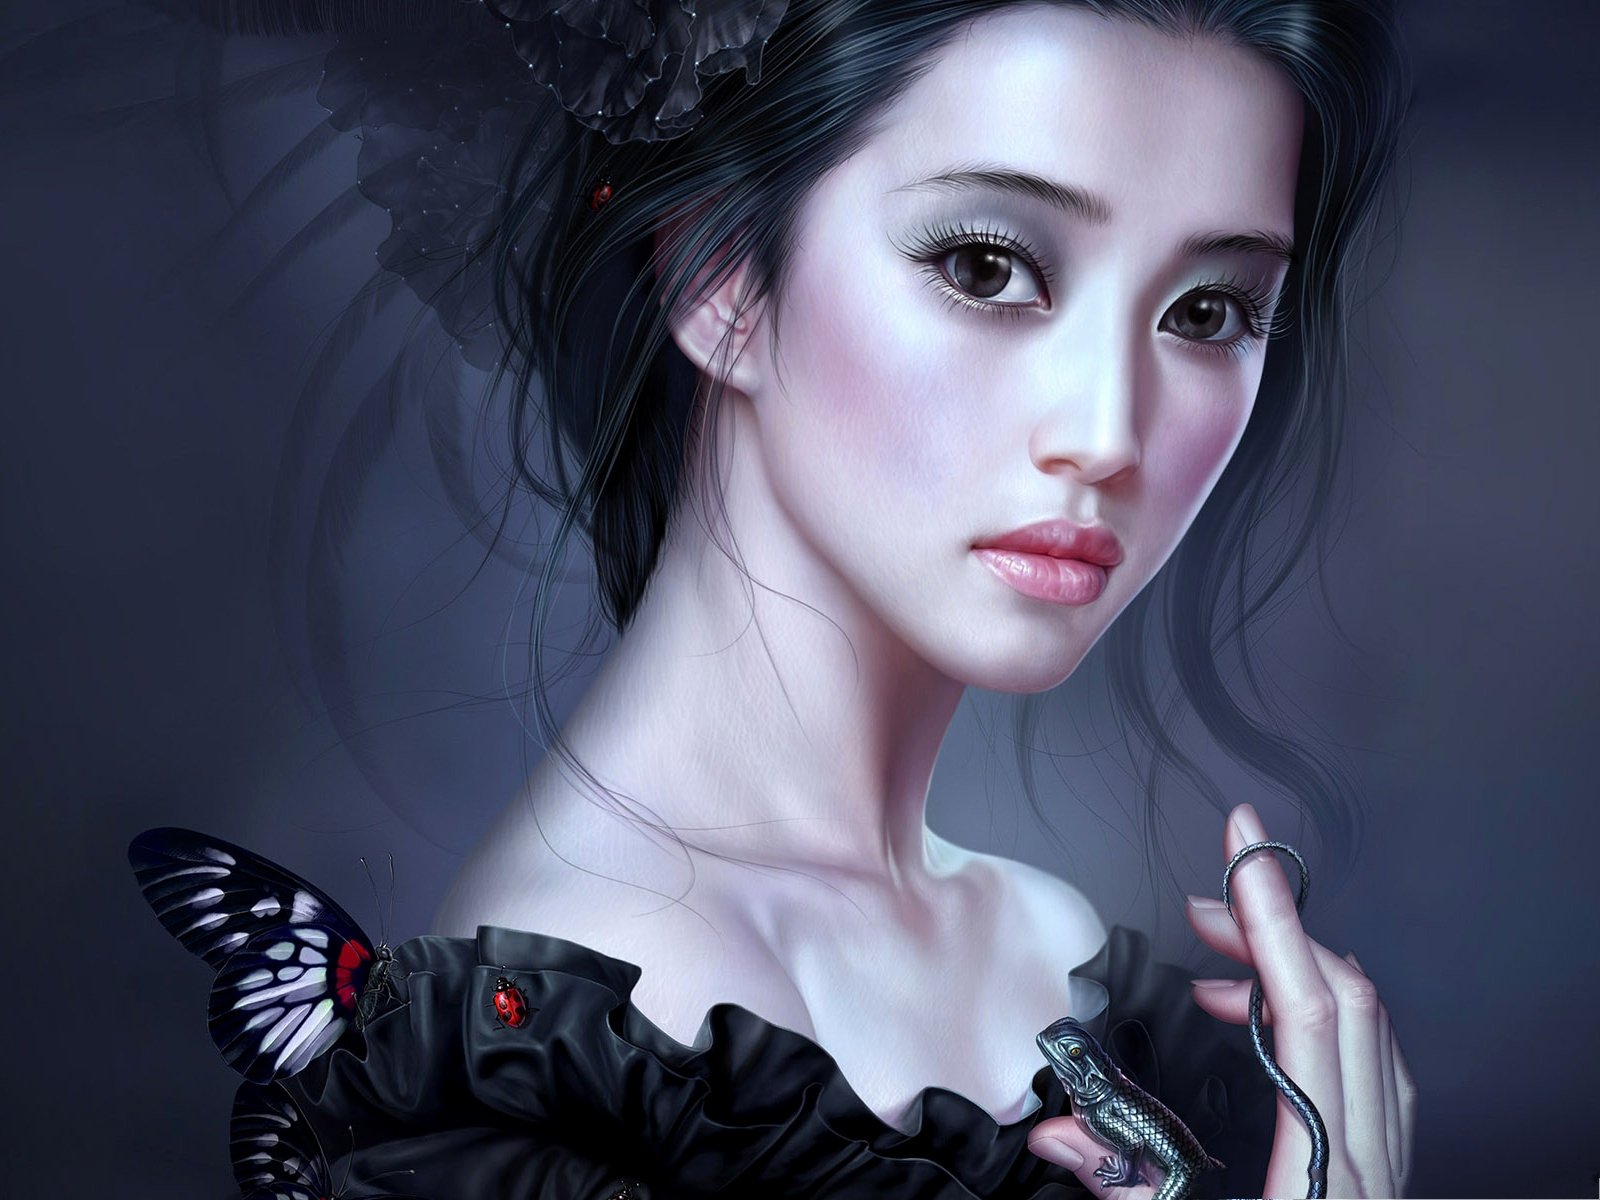 Beautiful Woman Painting Images Fresh 28 Beautiful Painting Girl – Weneedfun